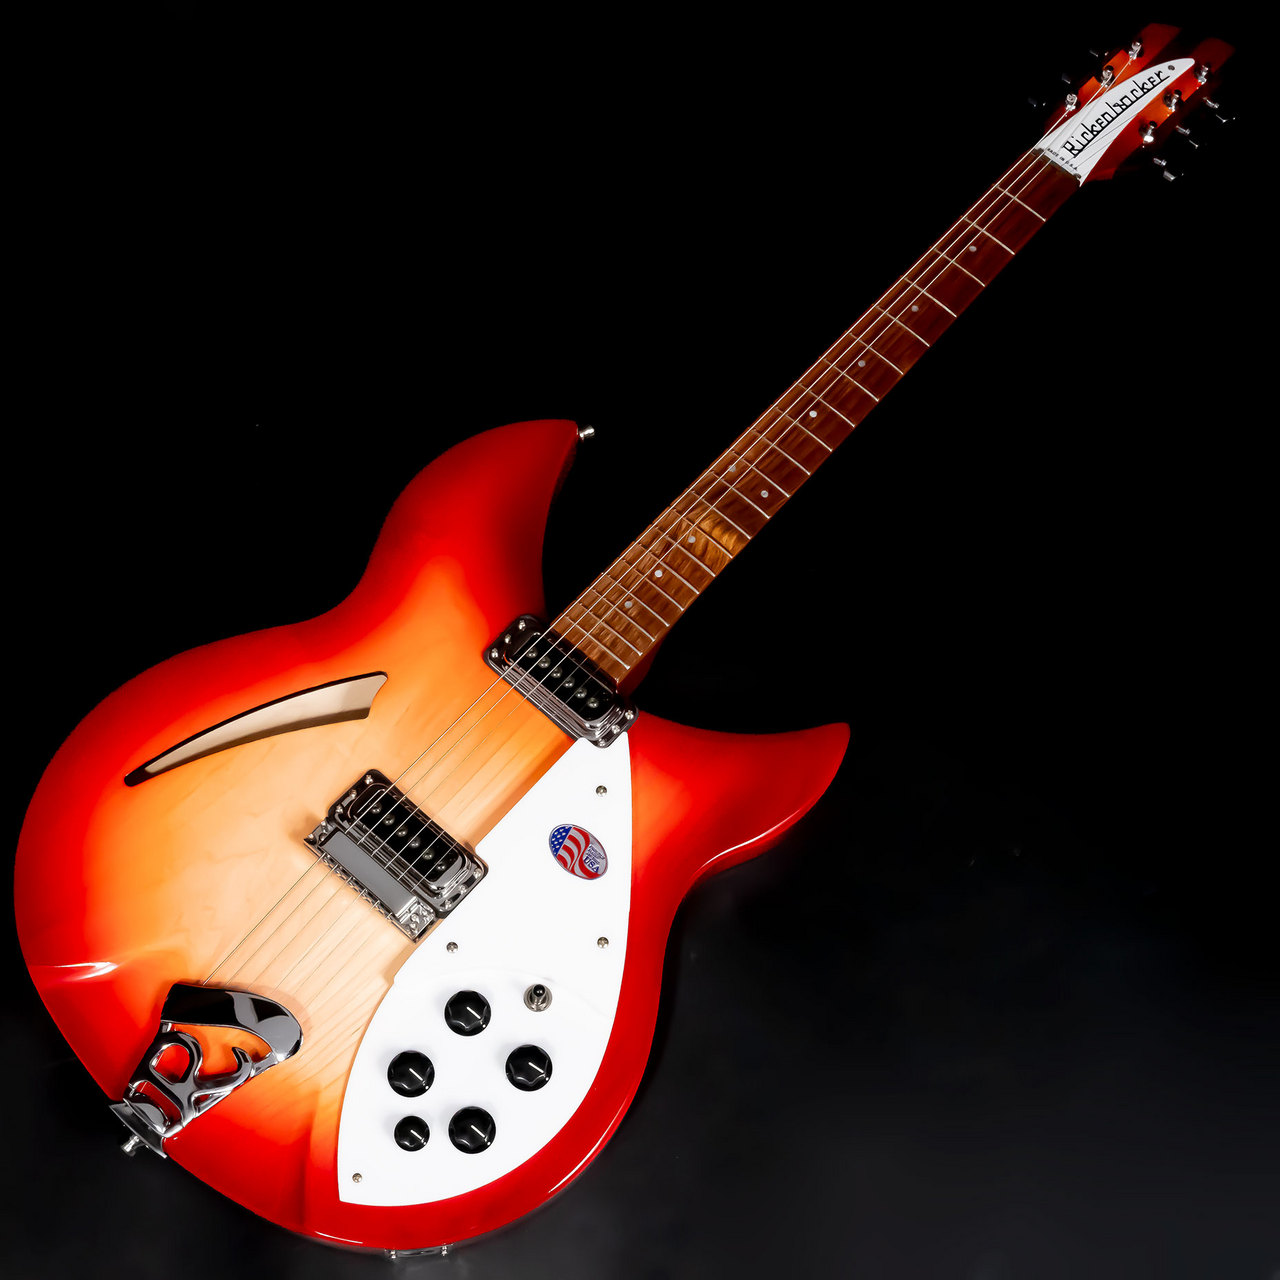 monogram リッケンバッカー330 タイプ MR-700G FG 日本限定 - ギター